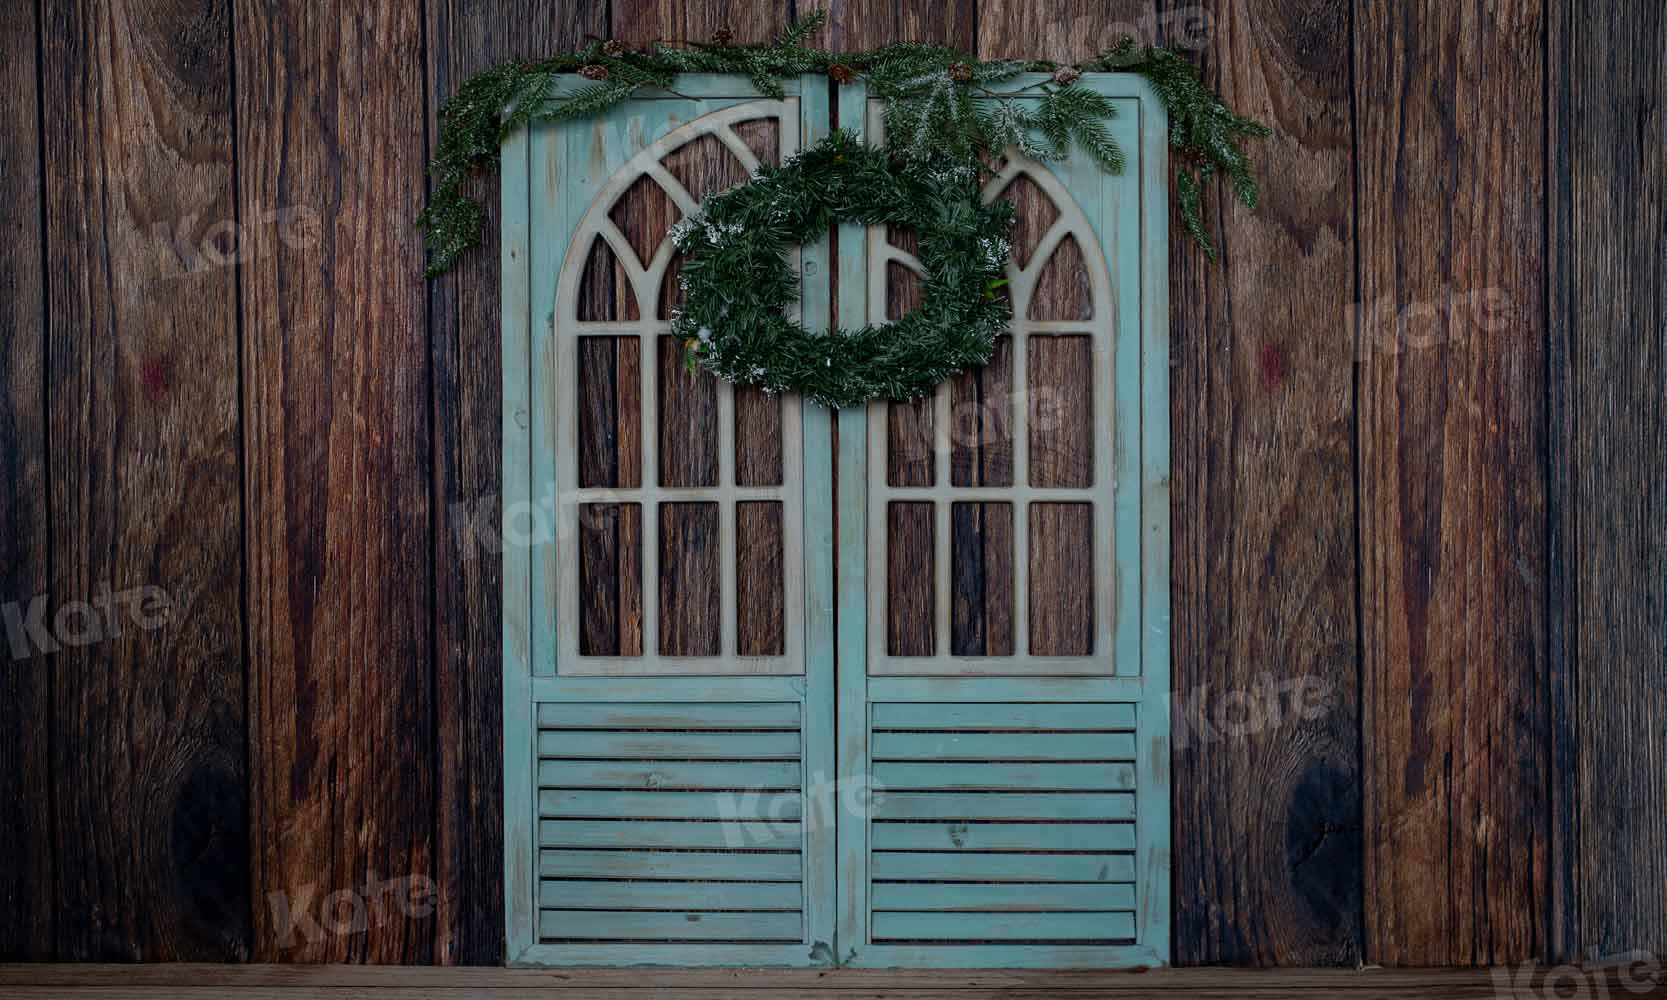 Kateクリスマス納屋のドアの背景